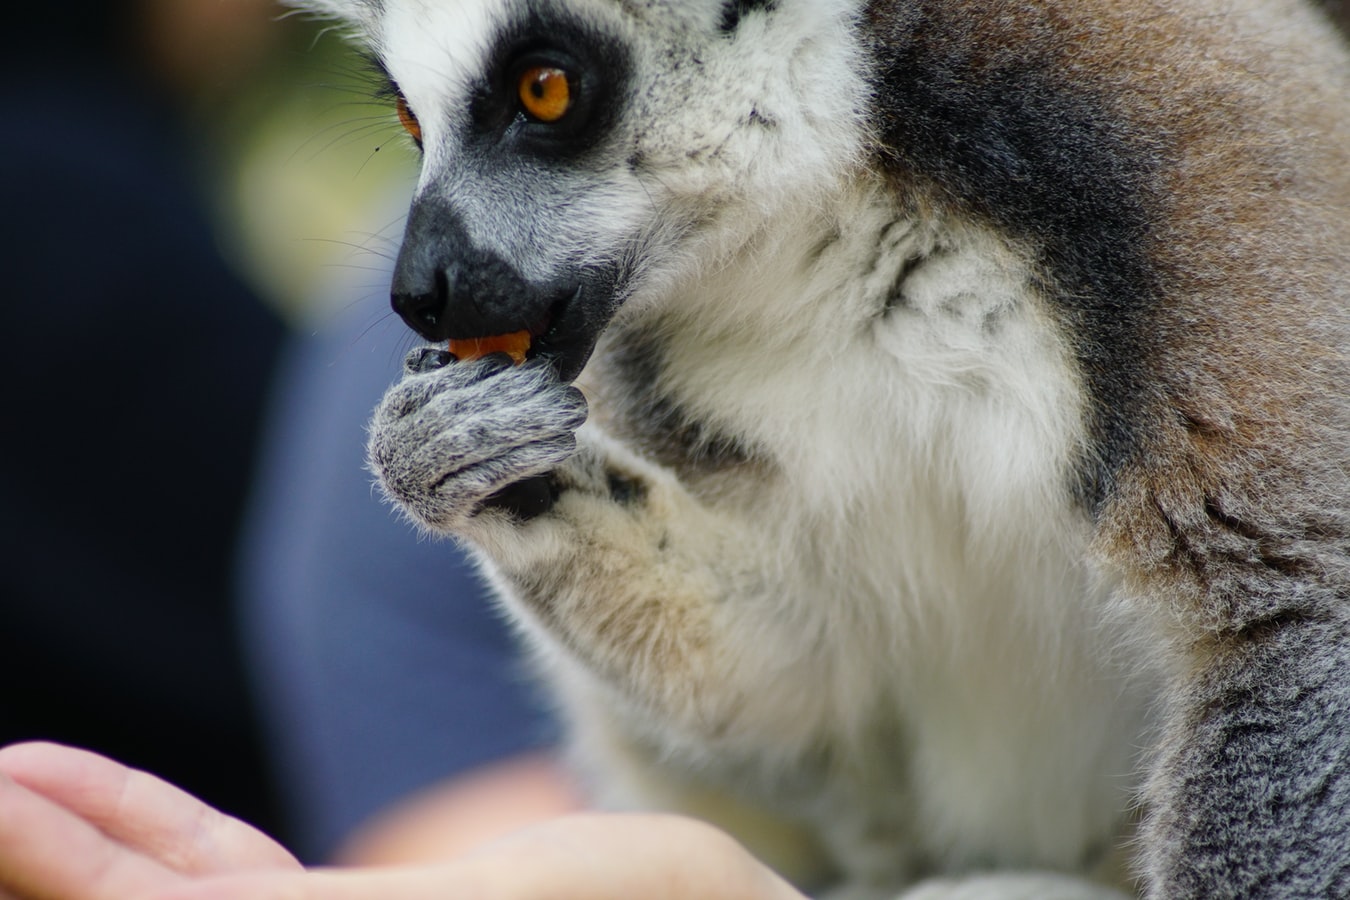 Feeding a Lemur